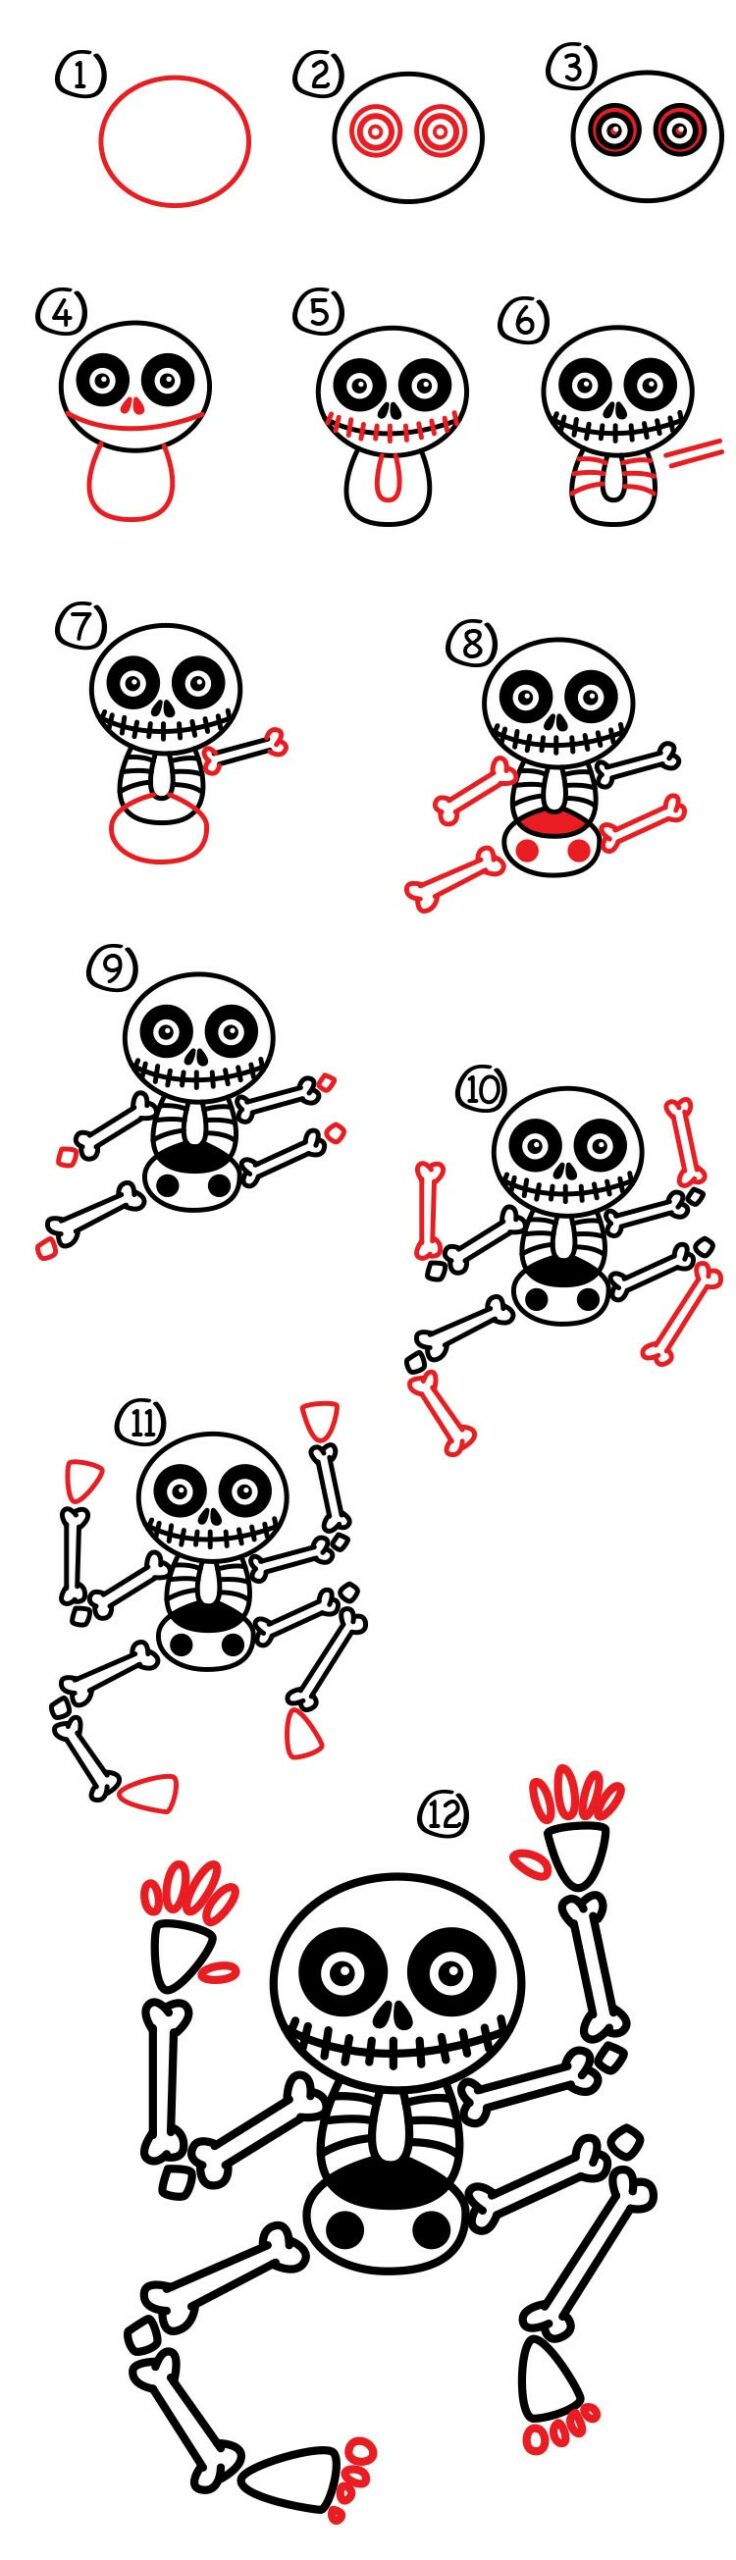 Skeleton idea 9 Drawing Ideas